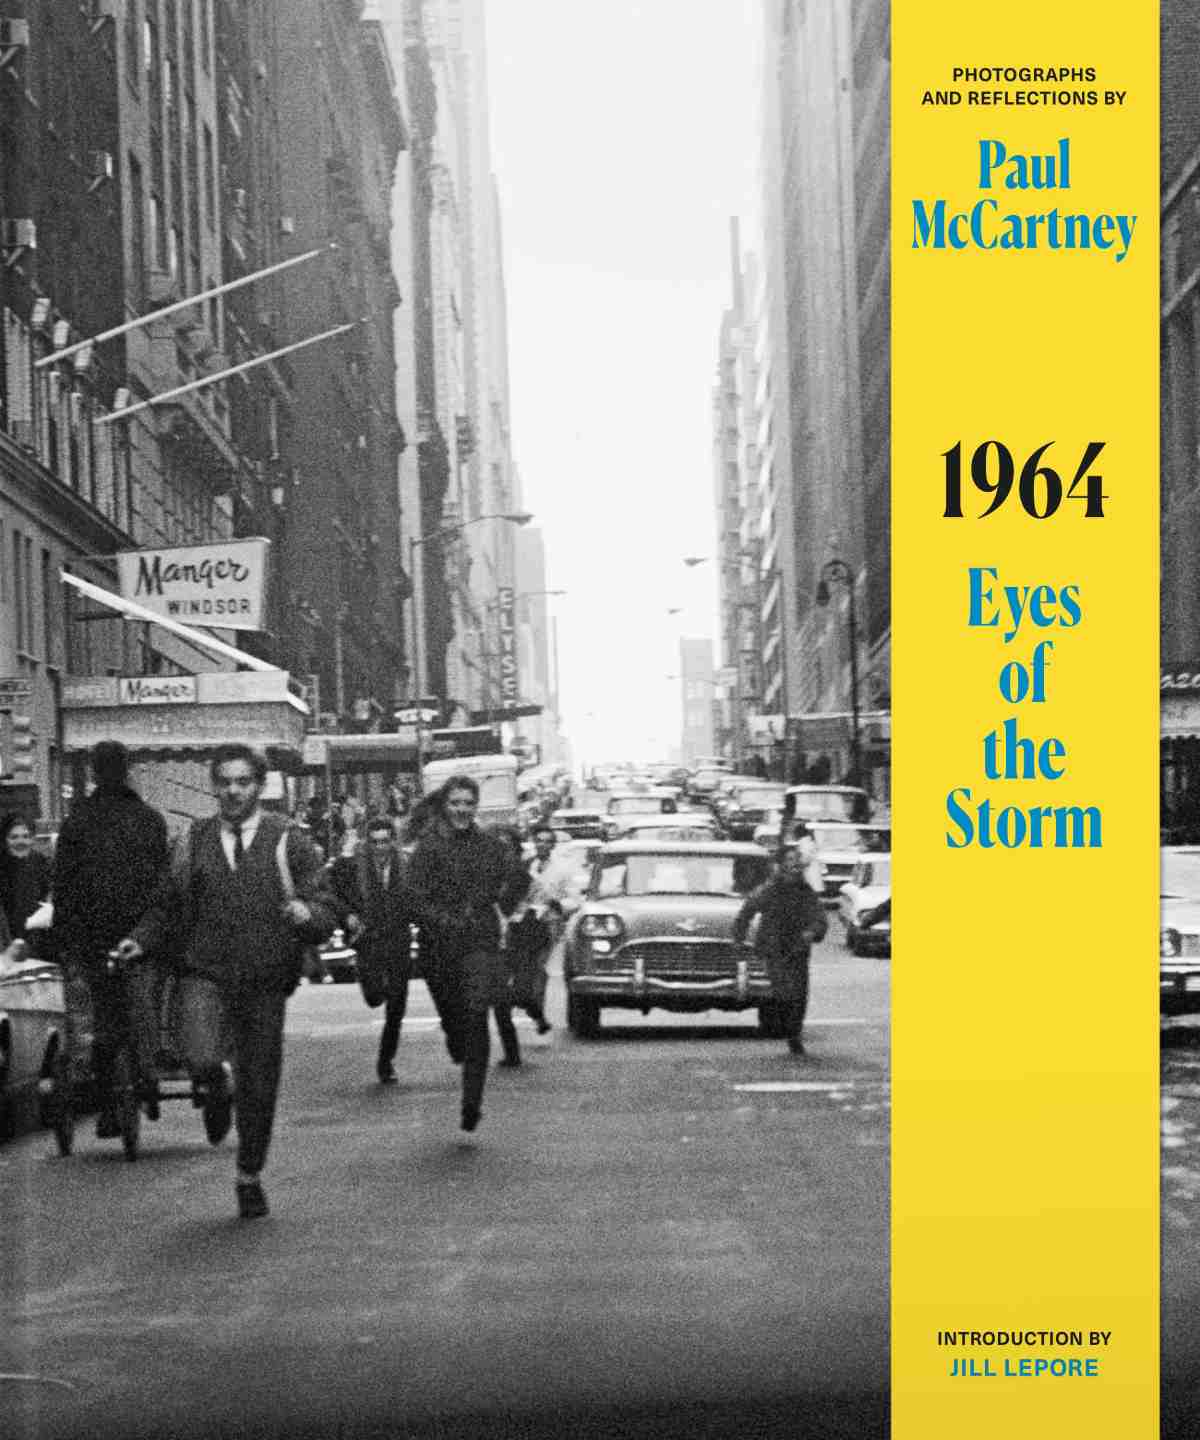 PaulMcCartney 1964 Eyes Of The Storm